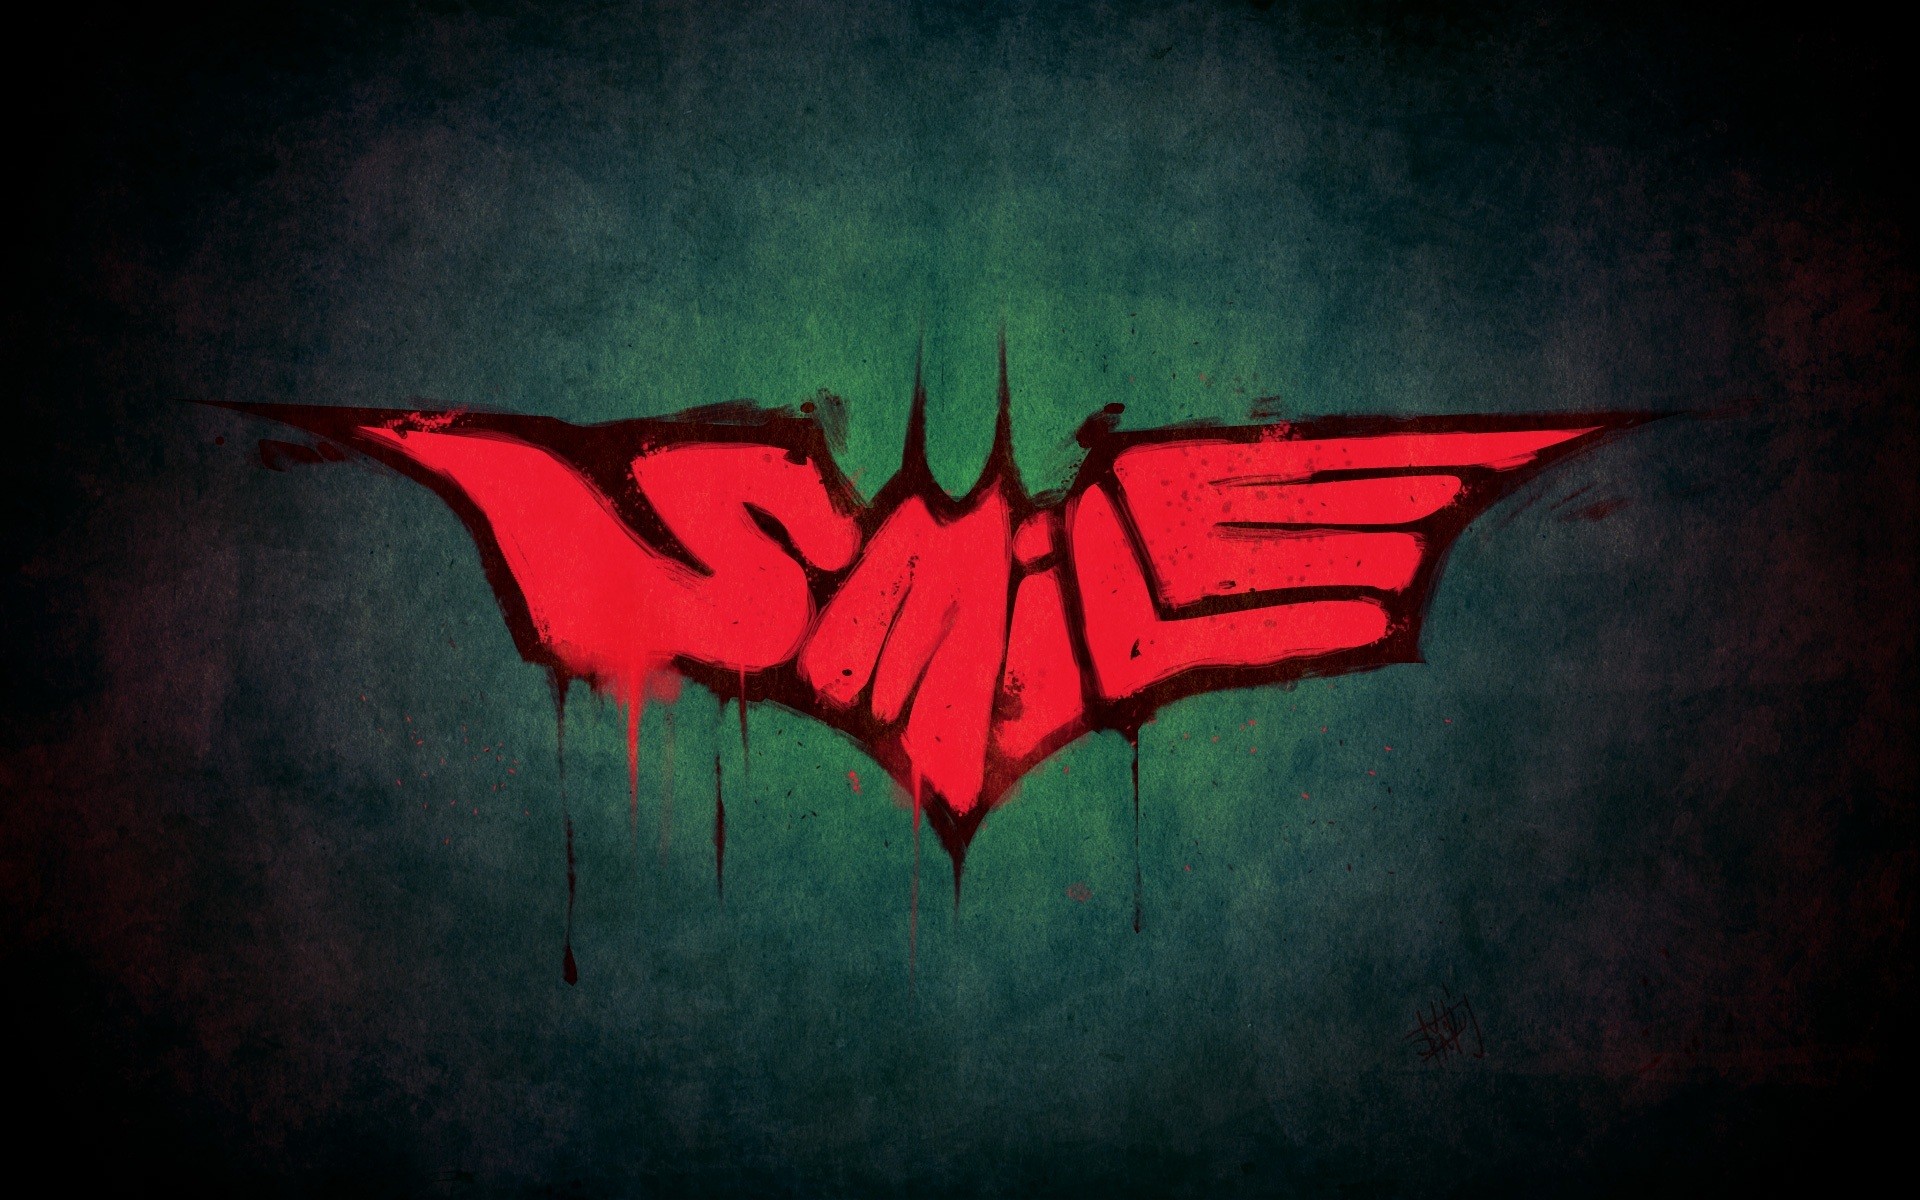 General 1920x1200 Batman minimalism smiling logo graffiti superhero comics digital art simple background